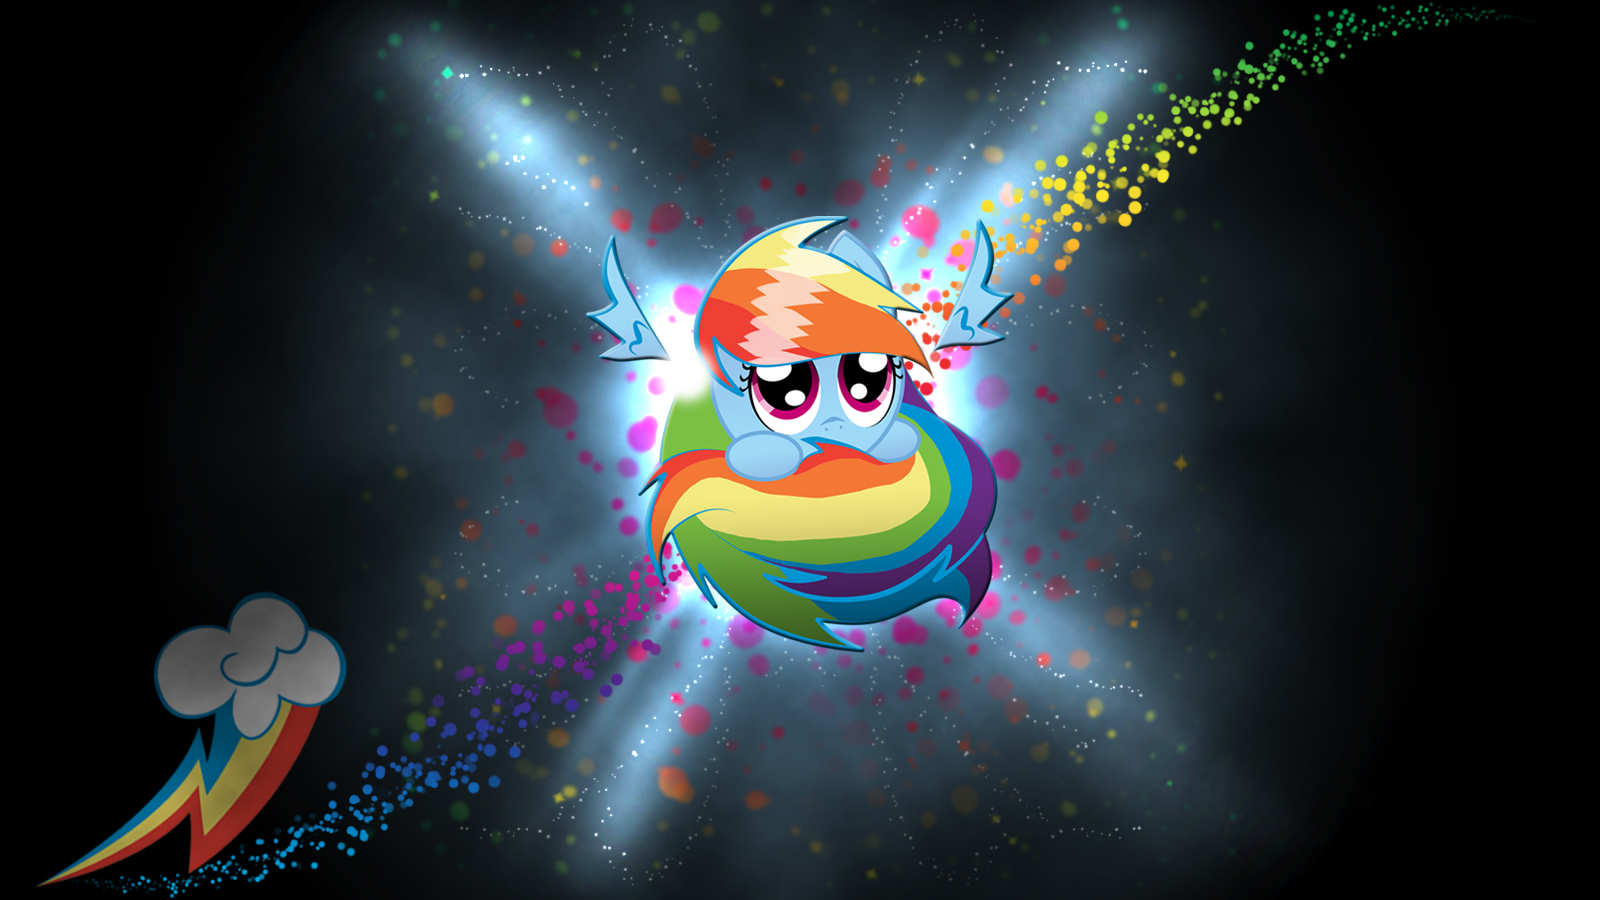 Rainbow Dash Sphere Background 1 by Kuroiraishu on DeviantArt